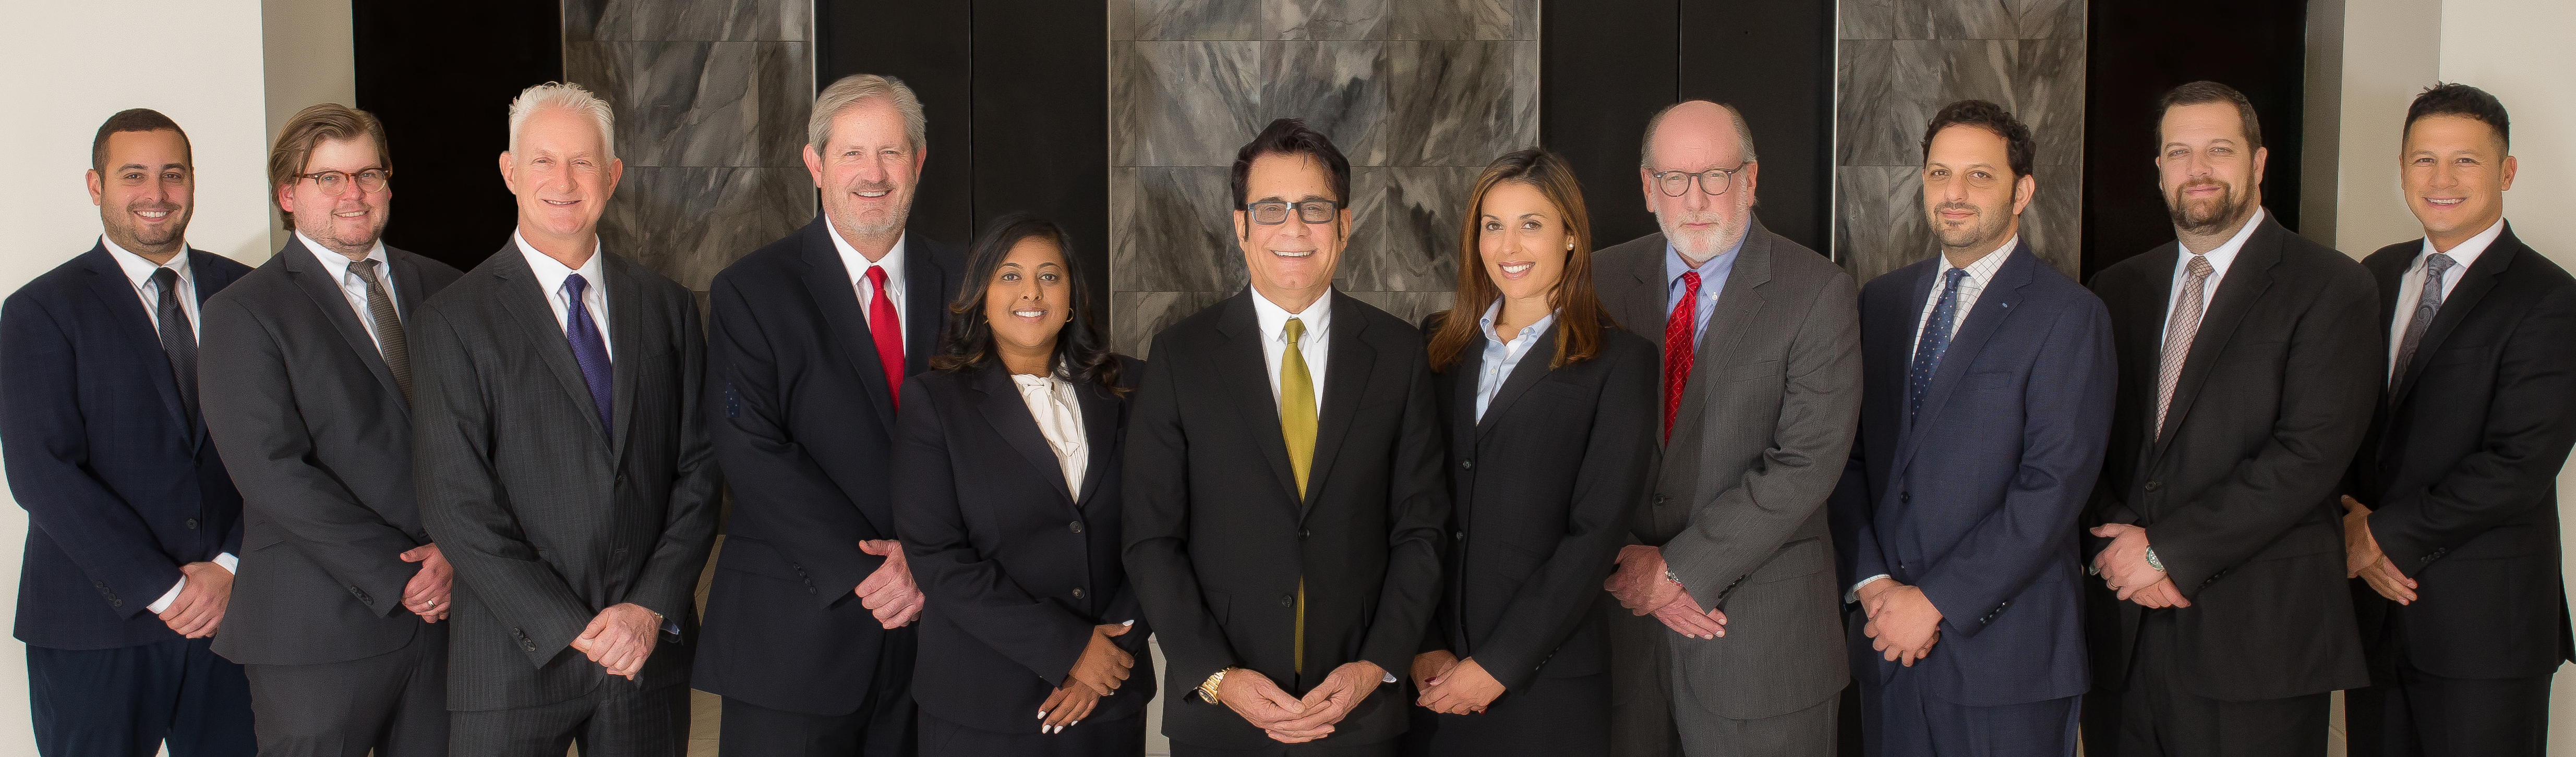 The Attorneys of Rad Law Firm Dallas, TX